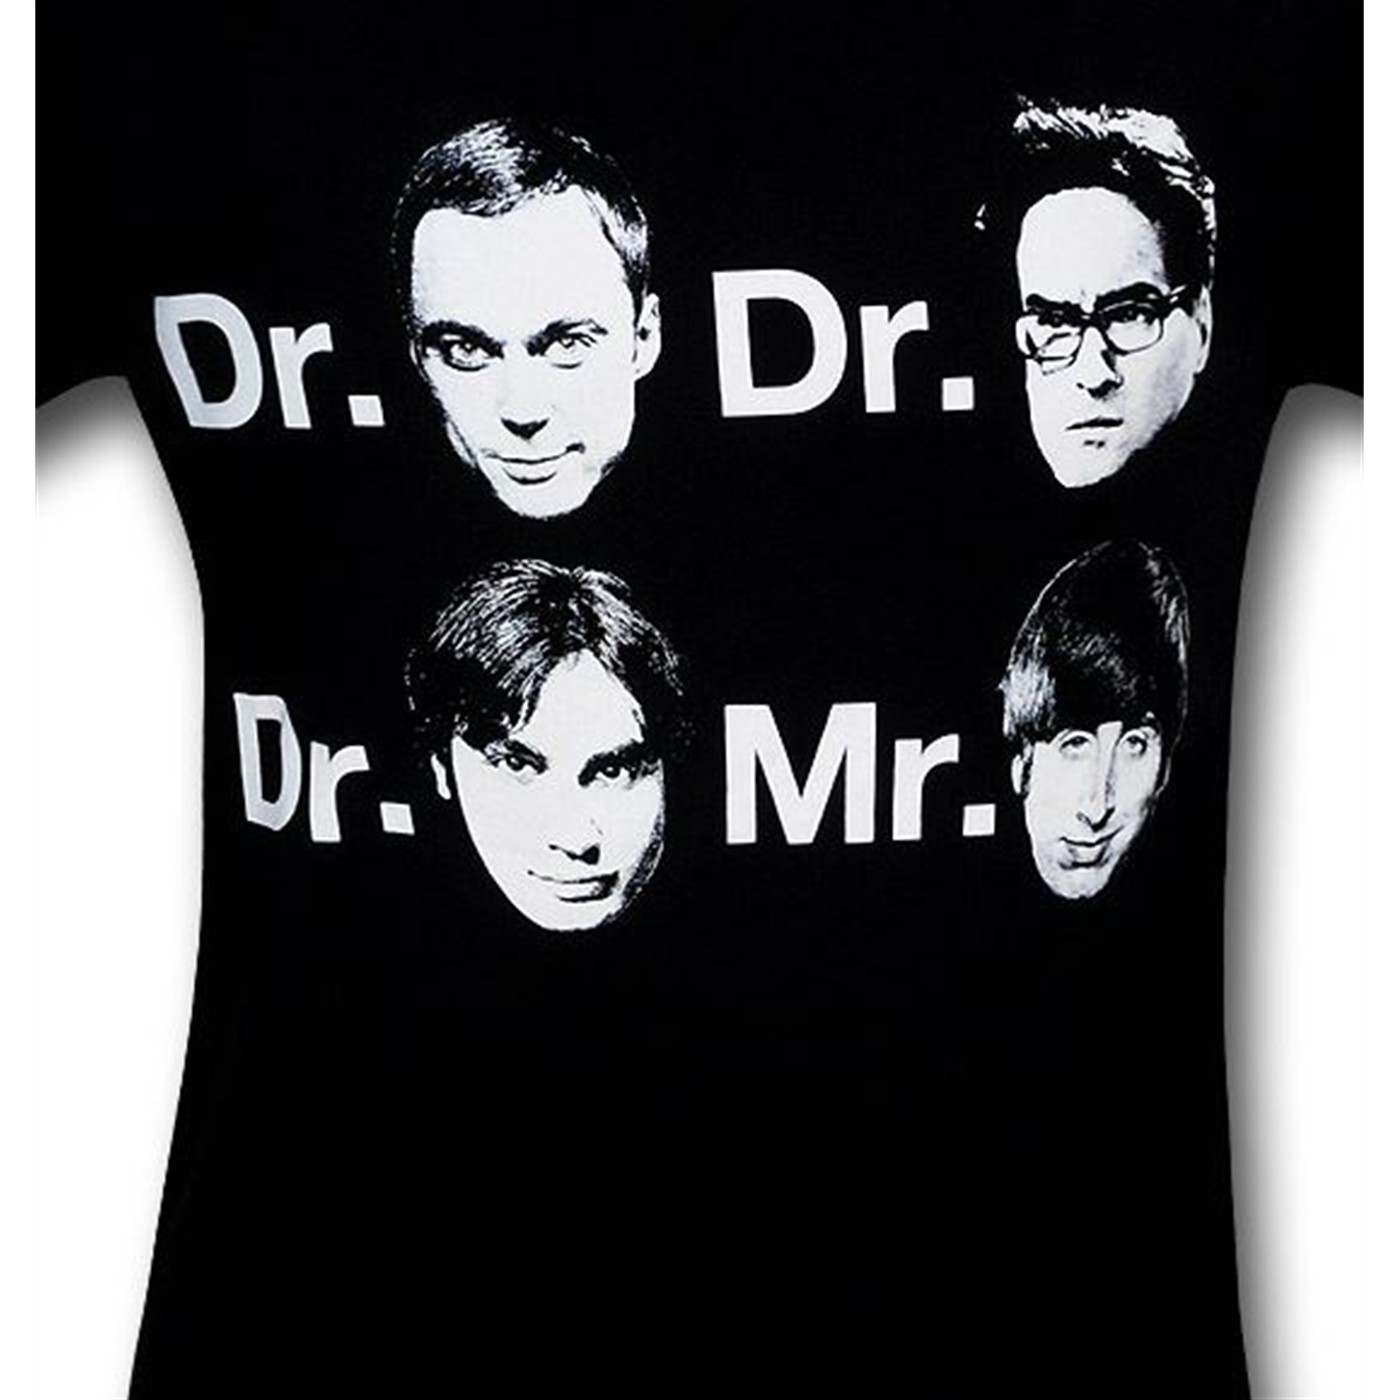 The Big Bang Theory Prefix Heads T-Shirt